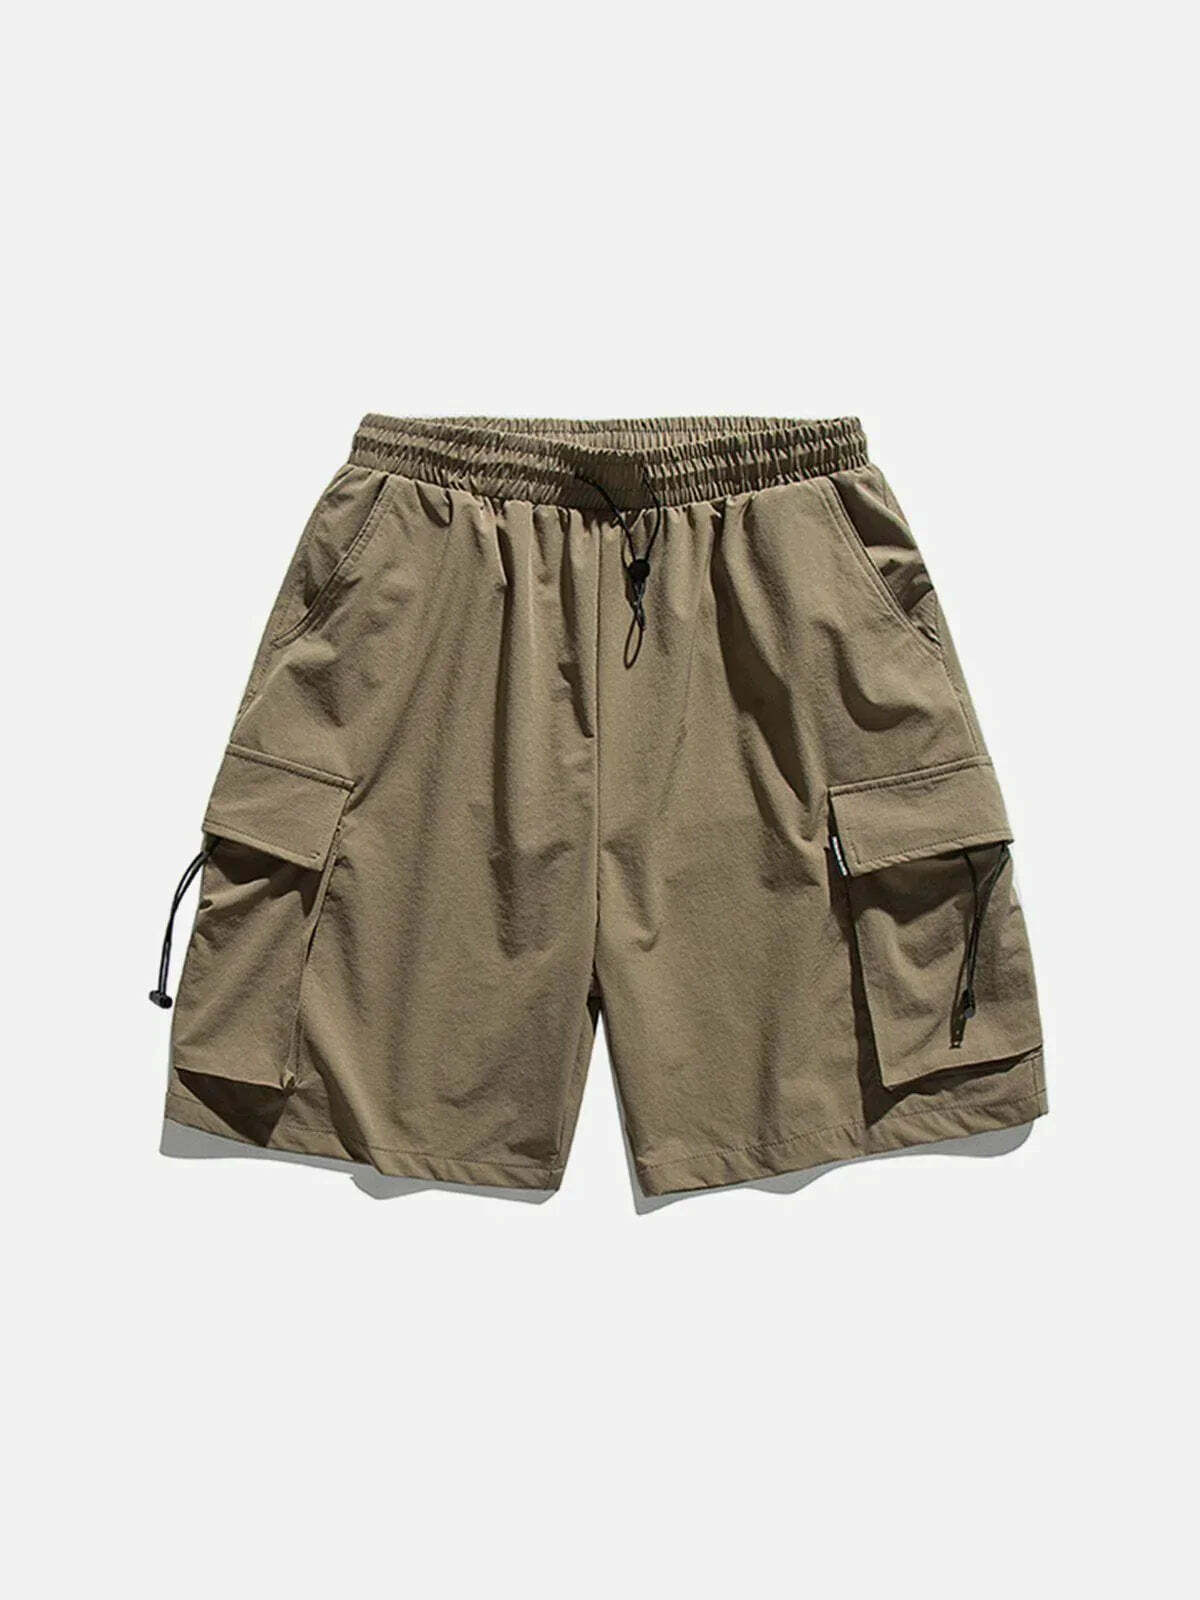 sleek loose fit pocket shorts urban streetwear essential 7054